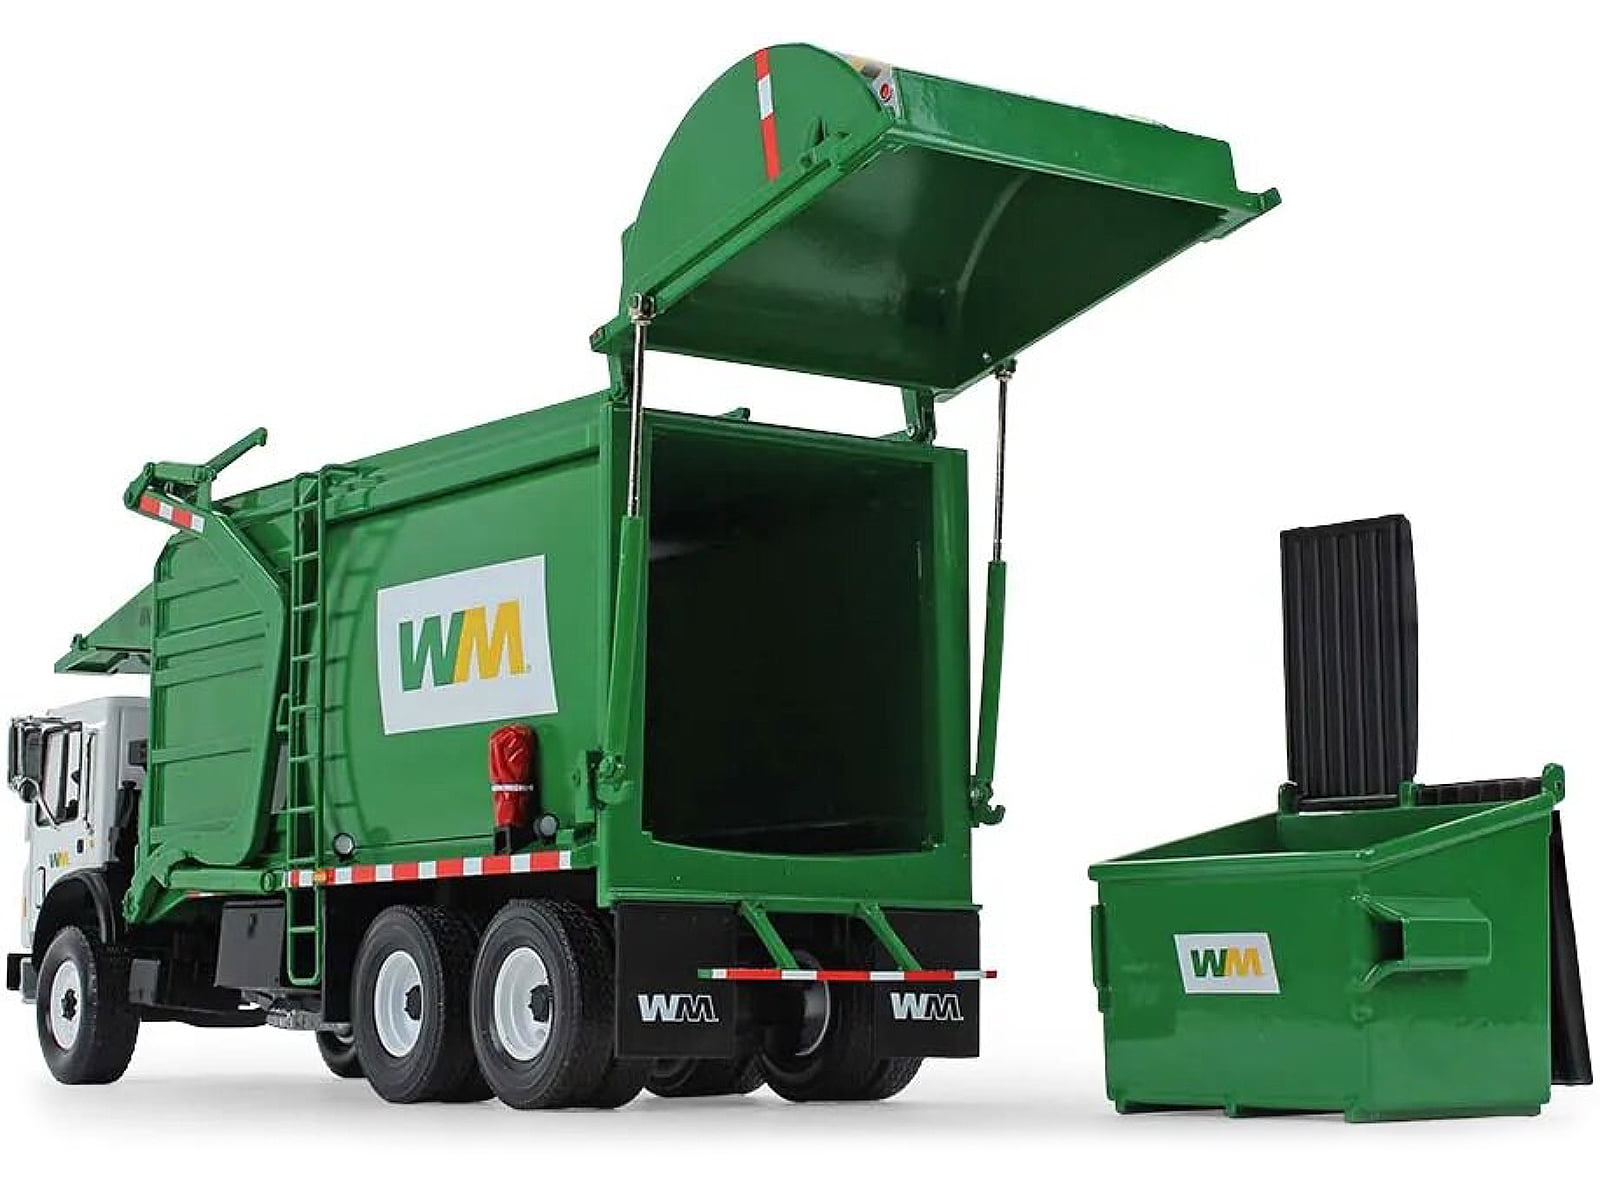 Mack Terrapro Wm Refuse Garbage Truck W